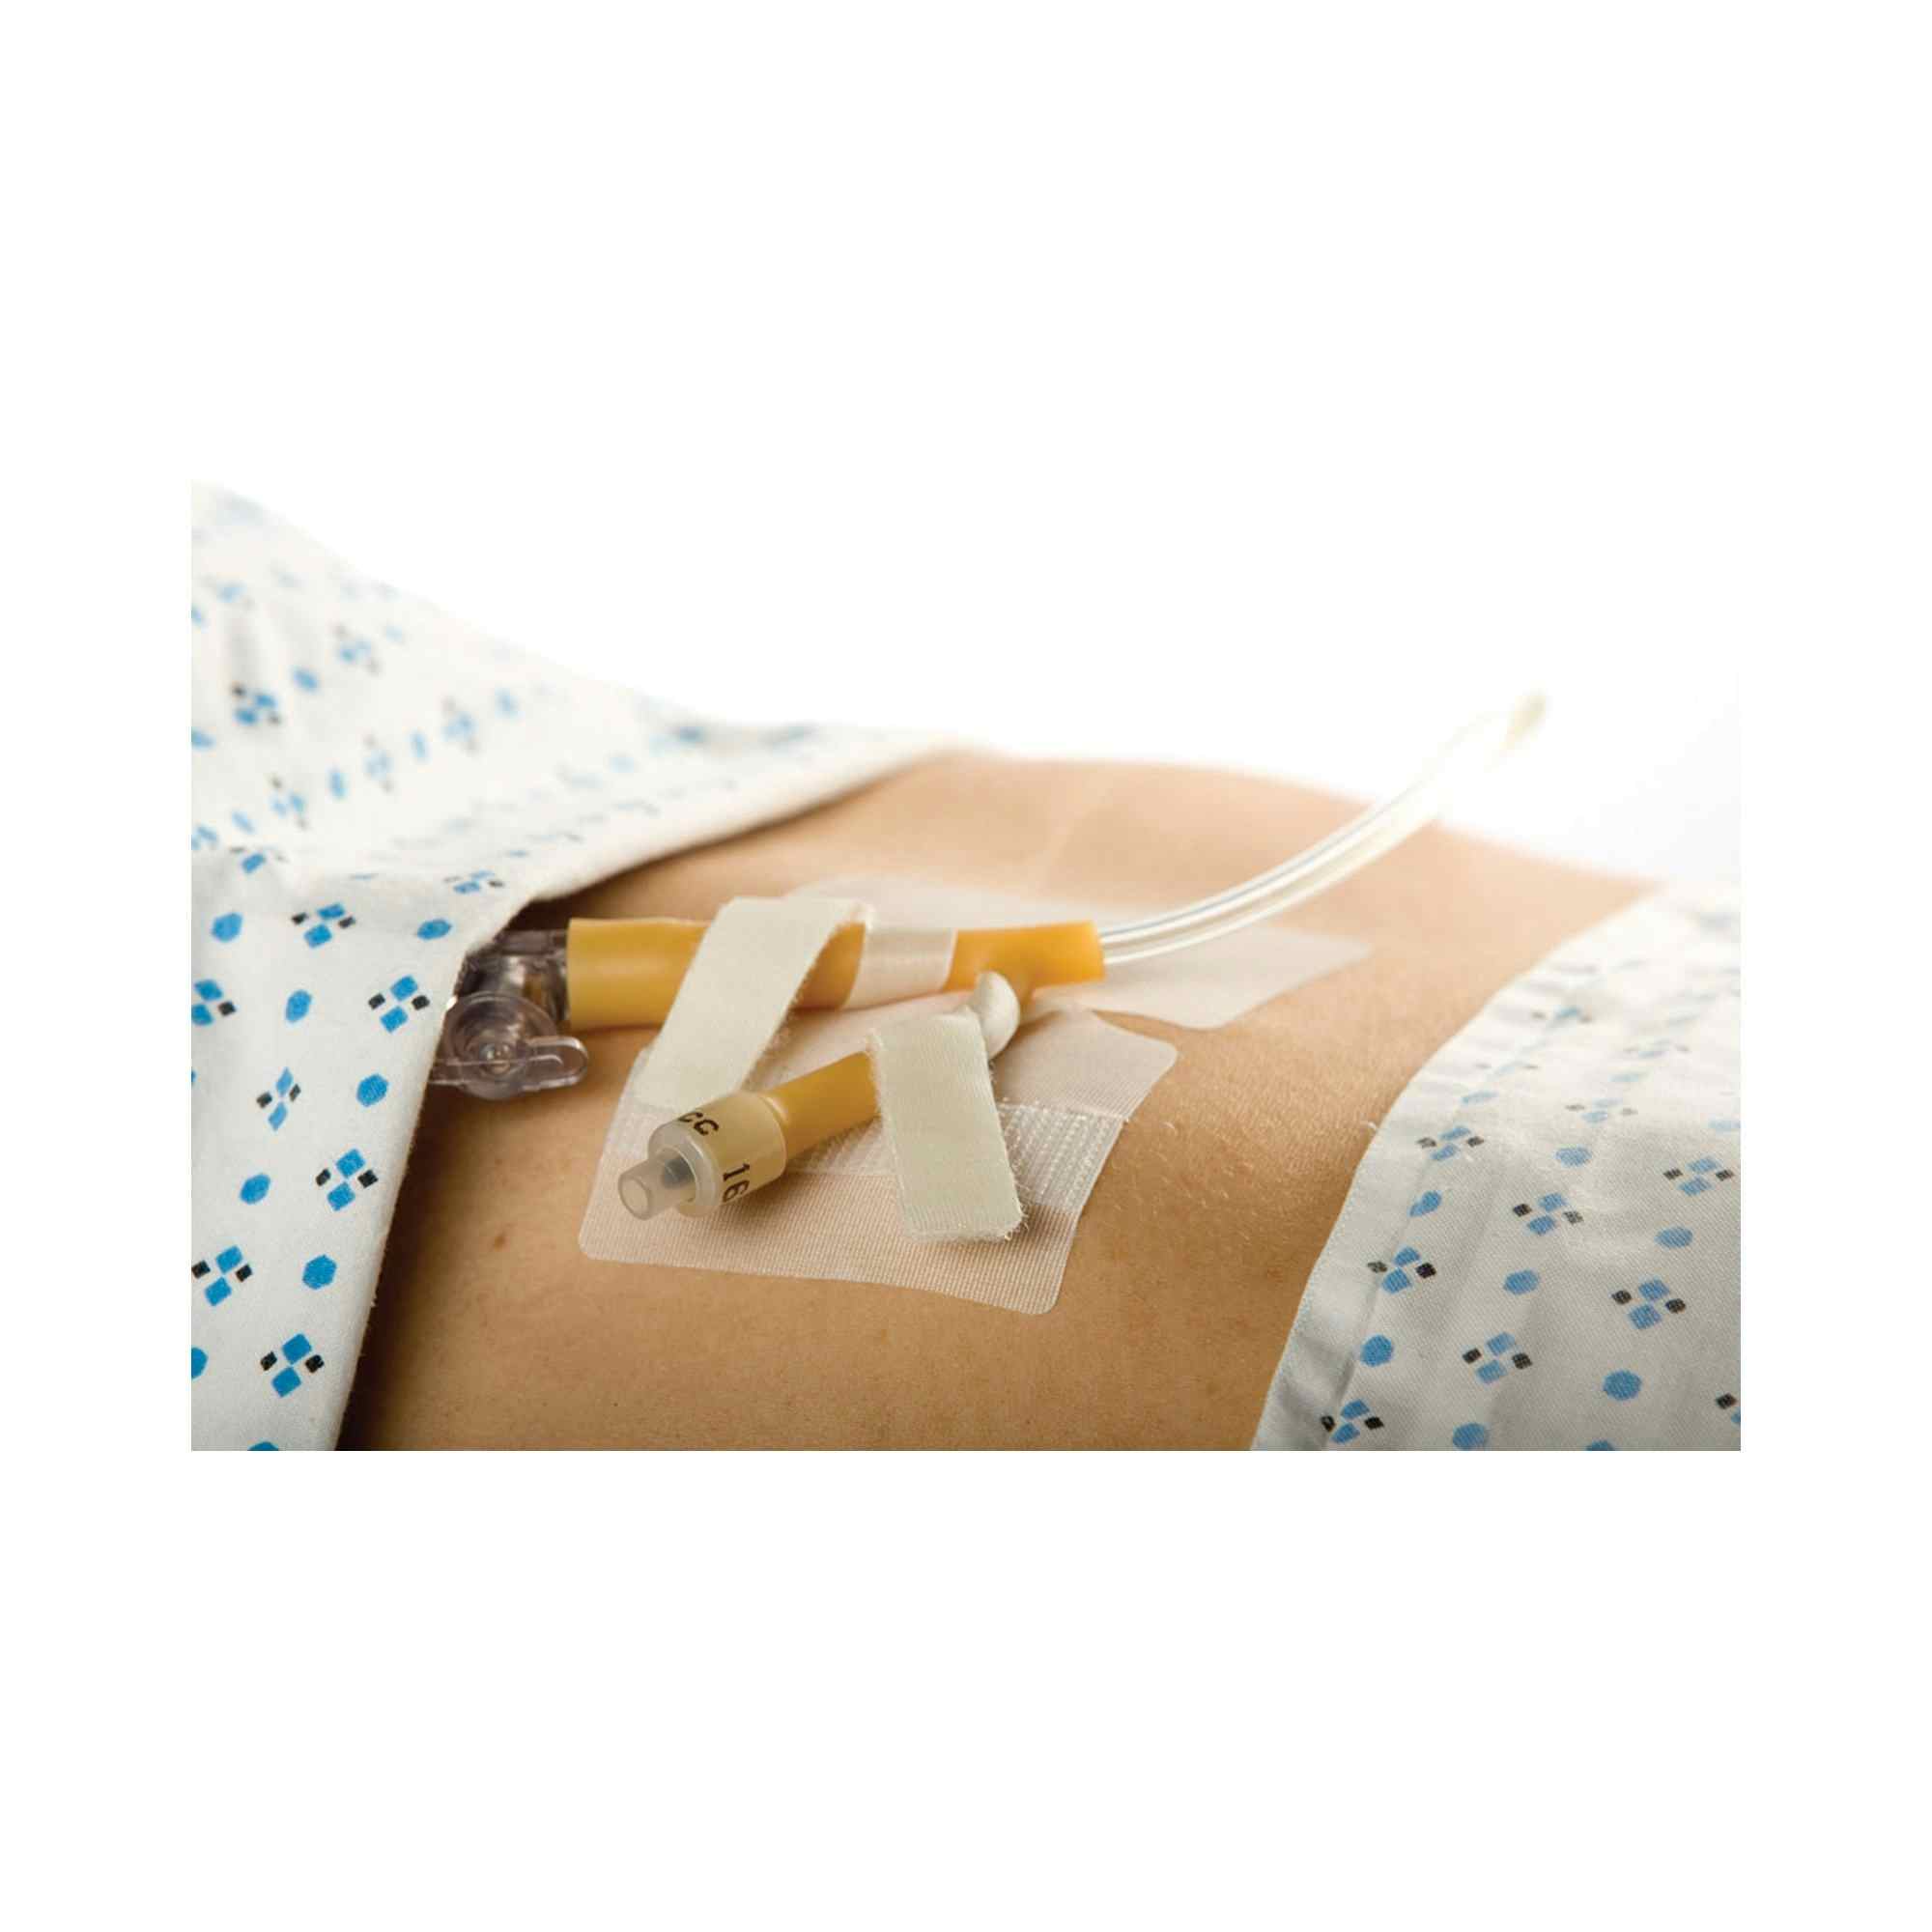 Cath-Secure Dual Tab Catheter Holder, 5445-4, 1 Each